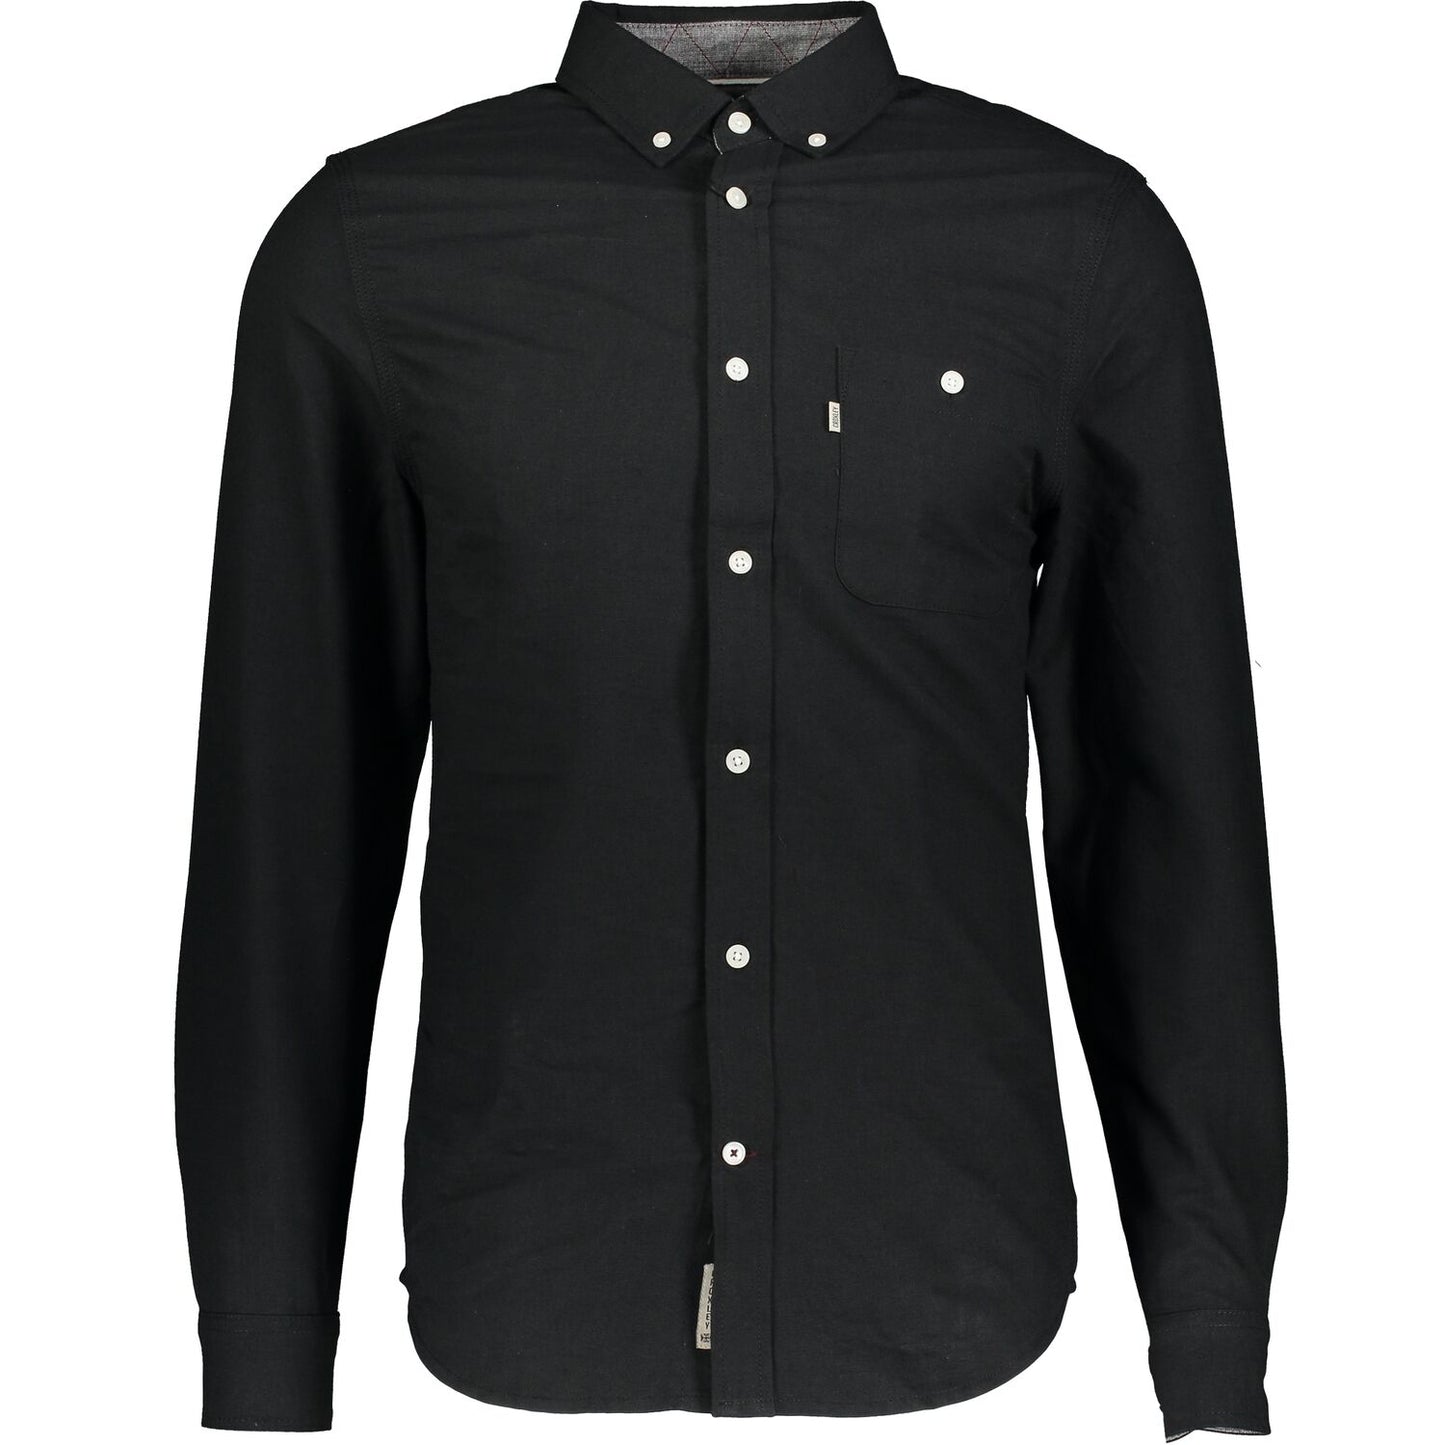 Croxley - Oxford Long Sleeve Shirt 2020 - LabelledUp.com